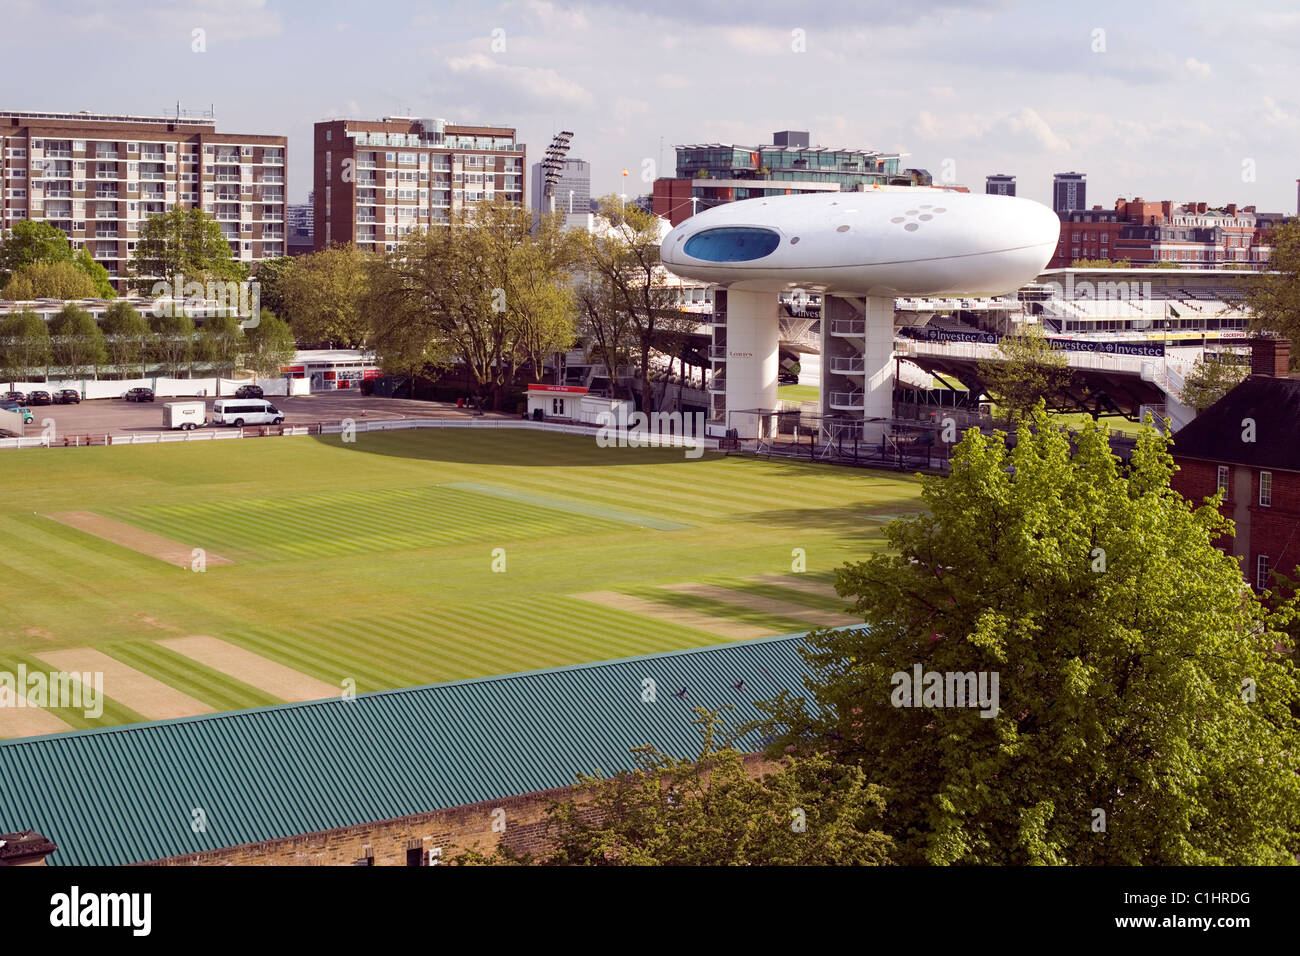 Lord's Cricket Ground, pépinière Pavilion, Londres, Angleterre, Royaume-Uni, Europe Banque D'Images